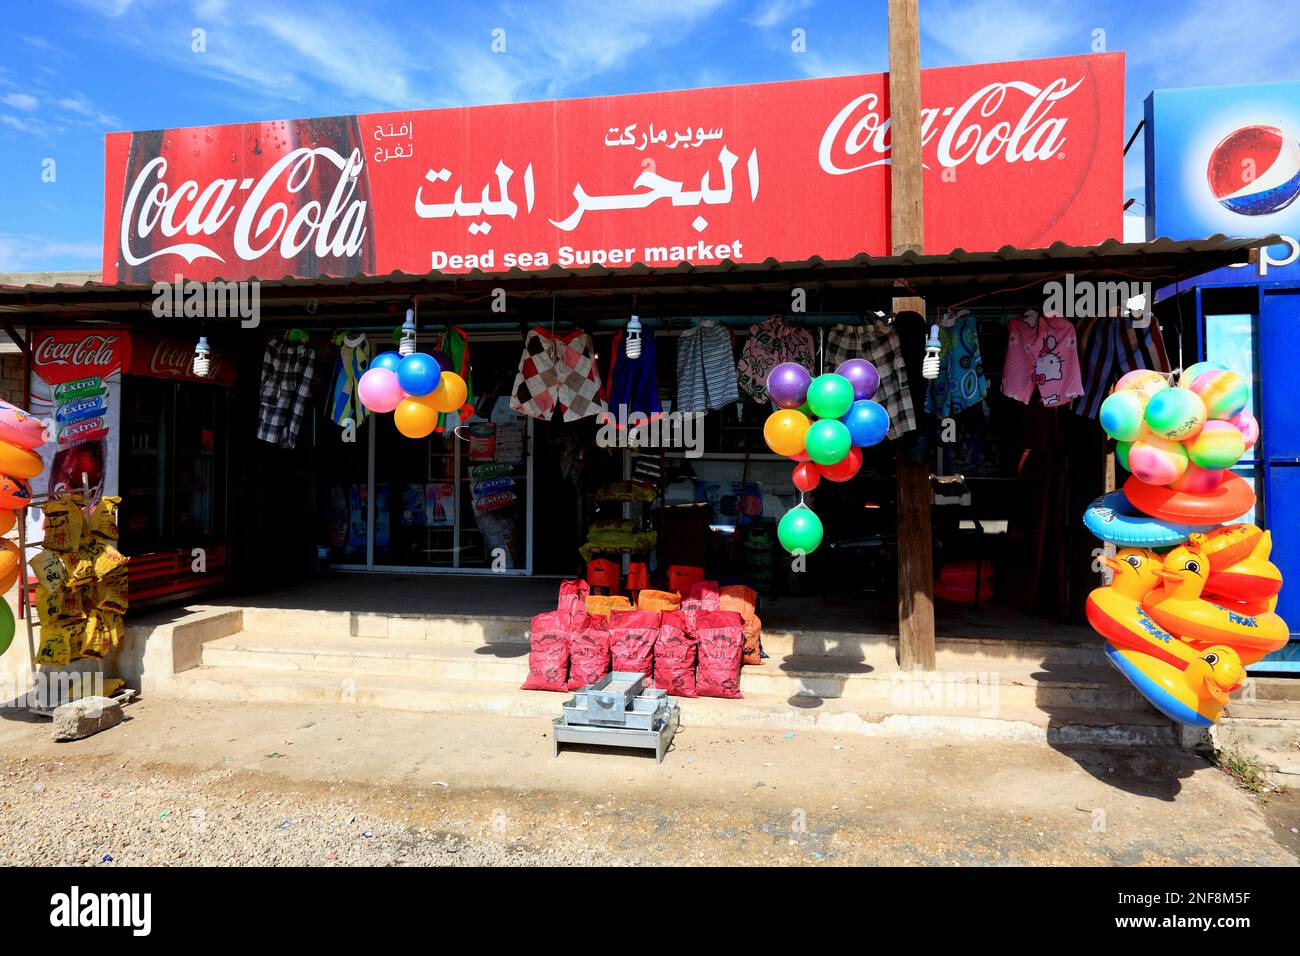 Kiosk und Geschäft für Souvenirs und Badeartikel, Totes Meer, Jordanien  /  Kiosk and shop for souvenirs and bath products, Dead Sea, Jordan Stock Photo